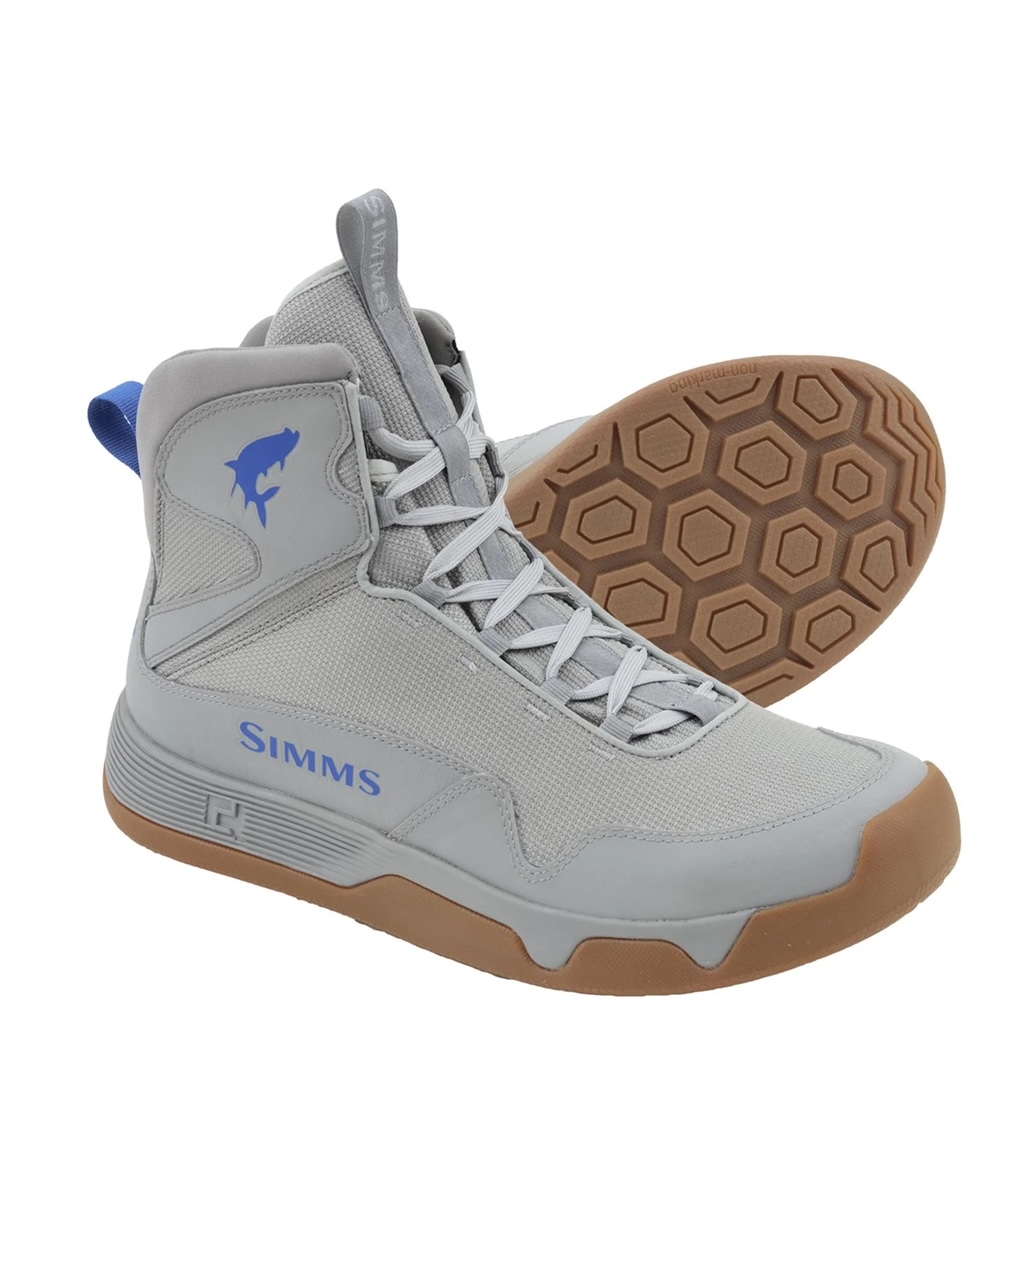 Simms Flats Sneaker Size 11